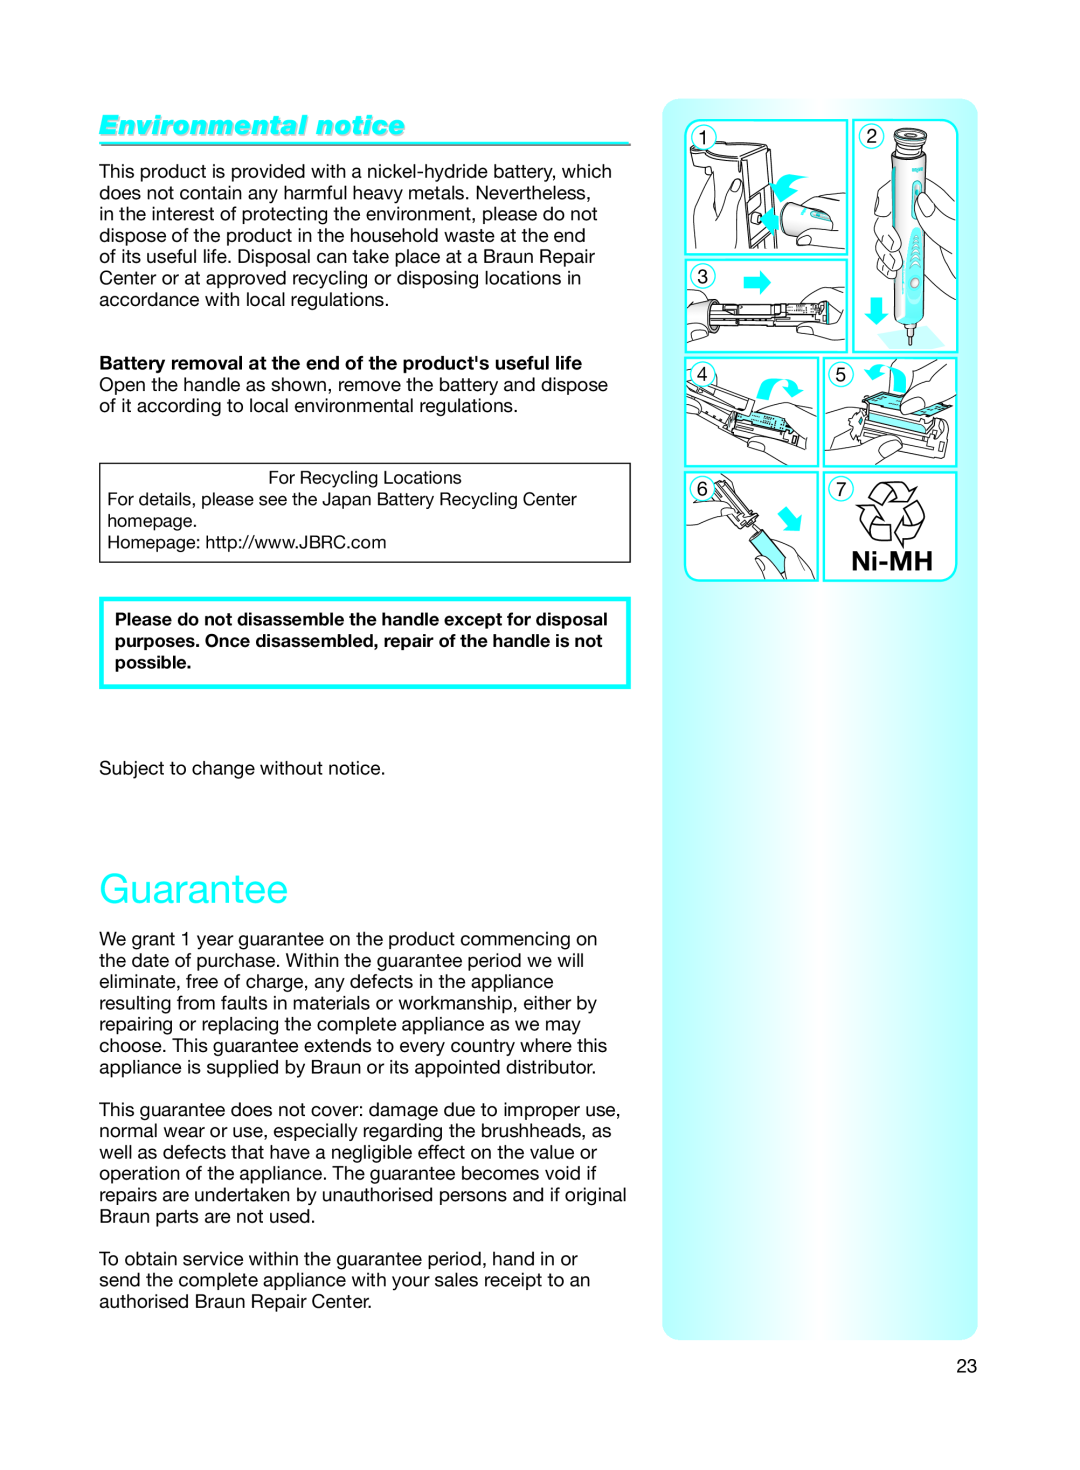 Braun 8000 warranty Environmental notice, Guarantee, Ni-MH 